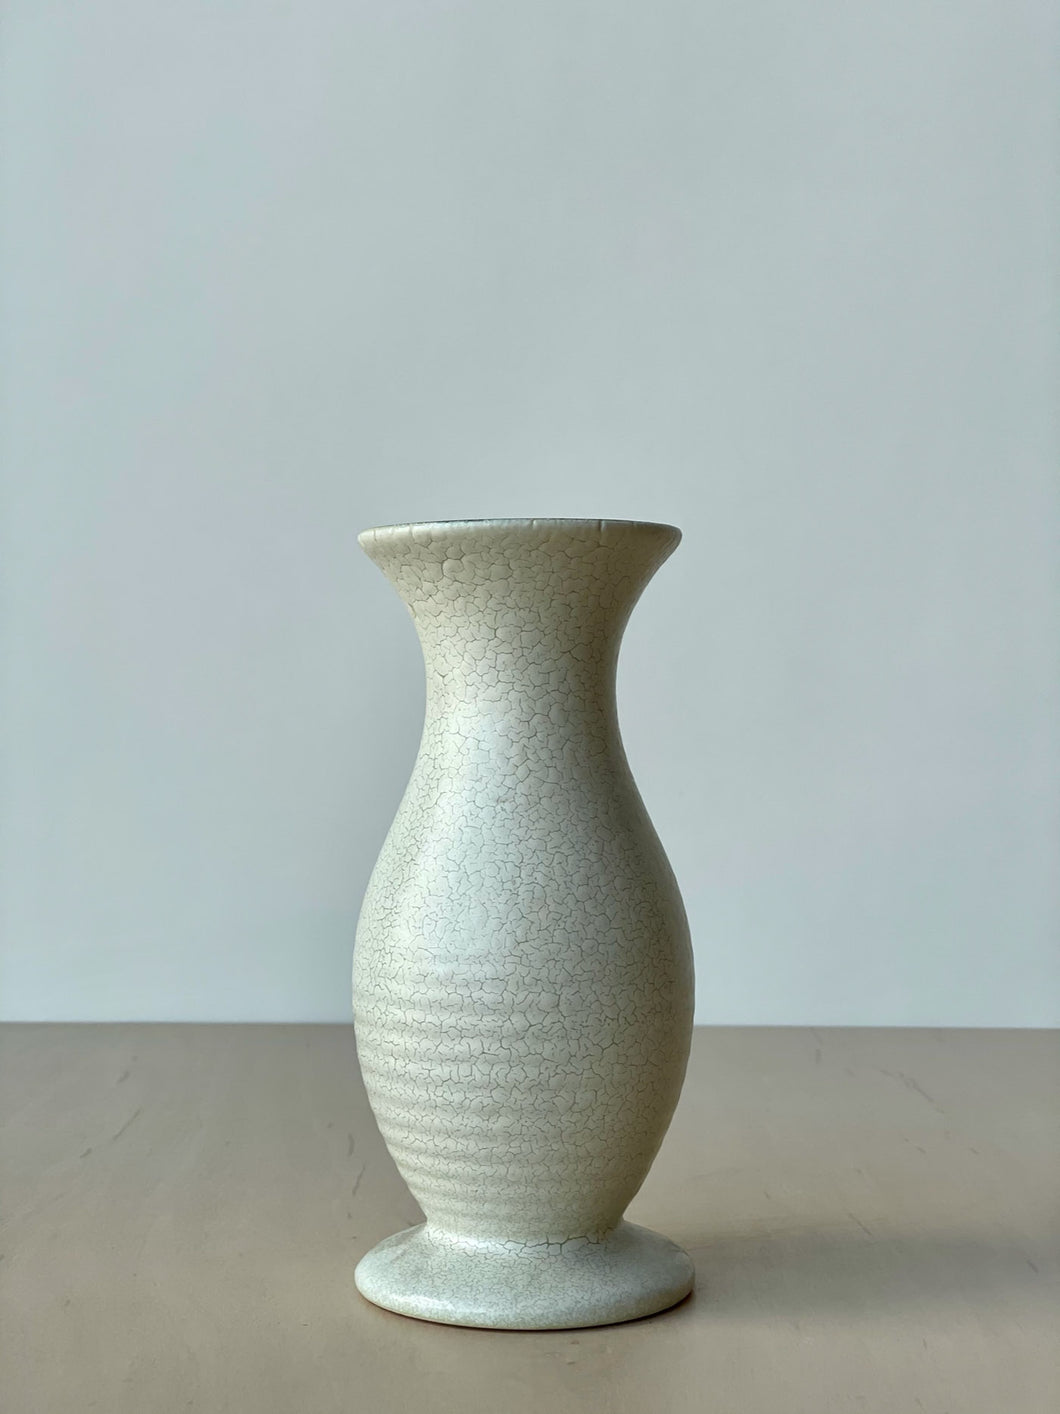 Vintage White Crackled Glaze Ceramic Vase